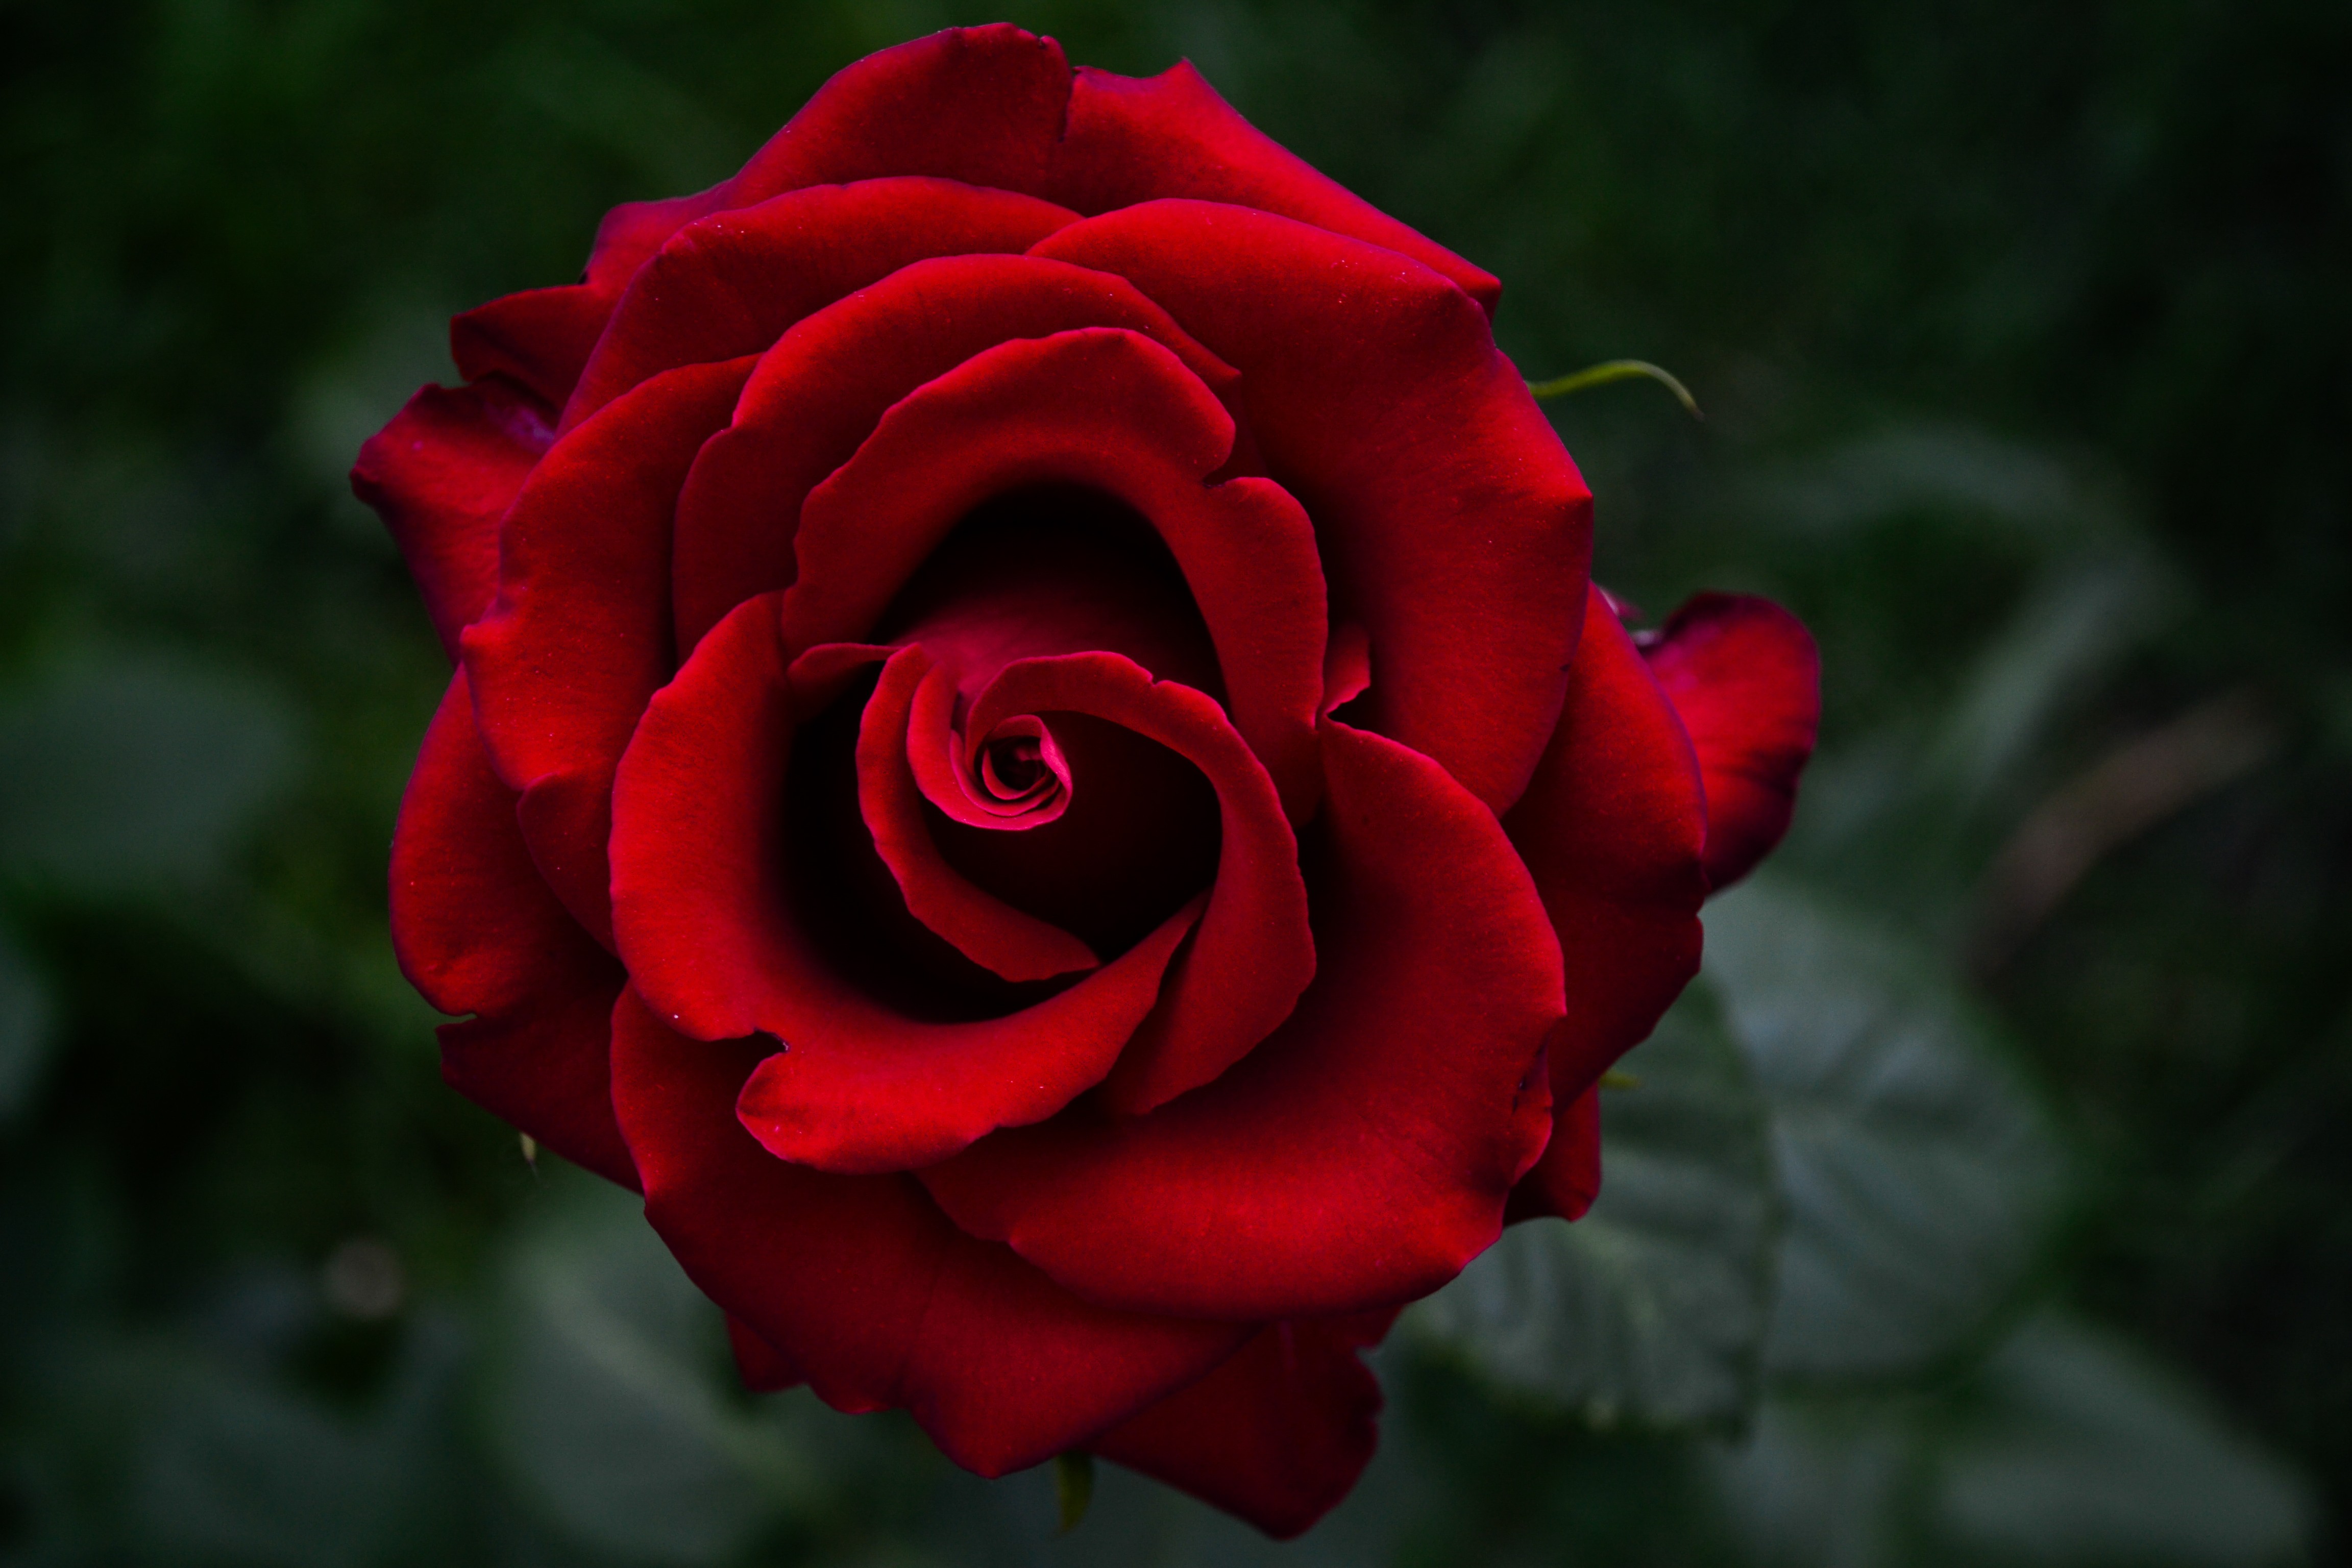 Free photo: Red Rose macro, Drops, Organic